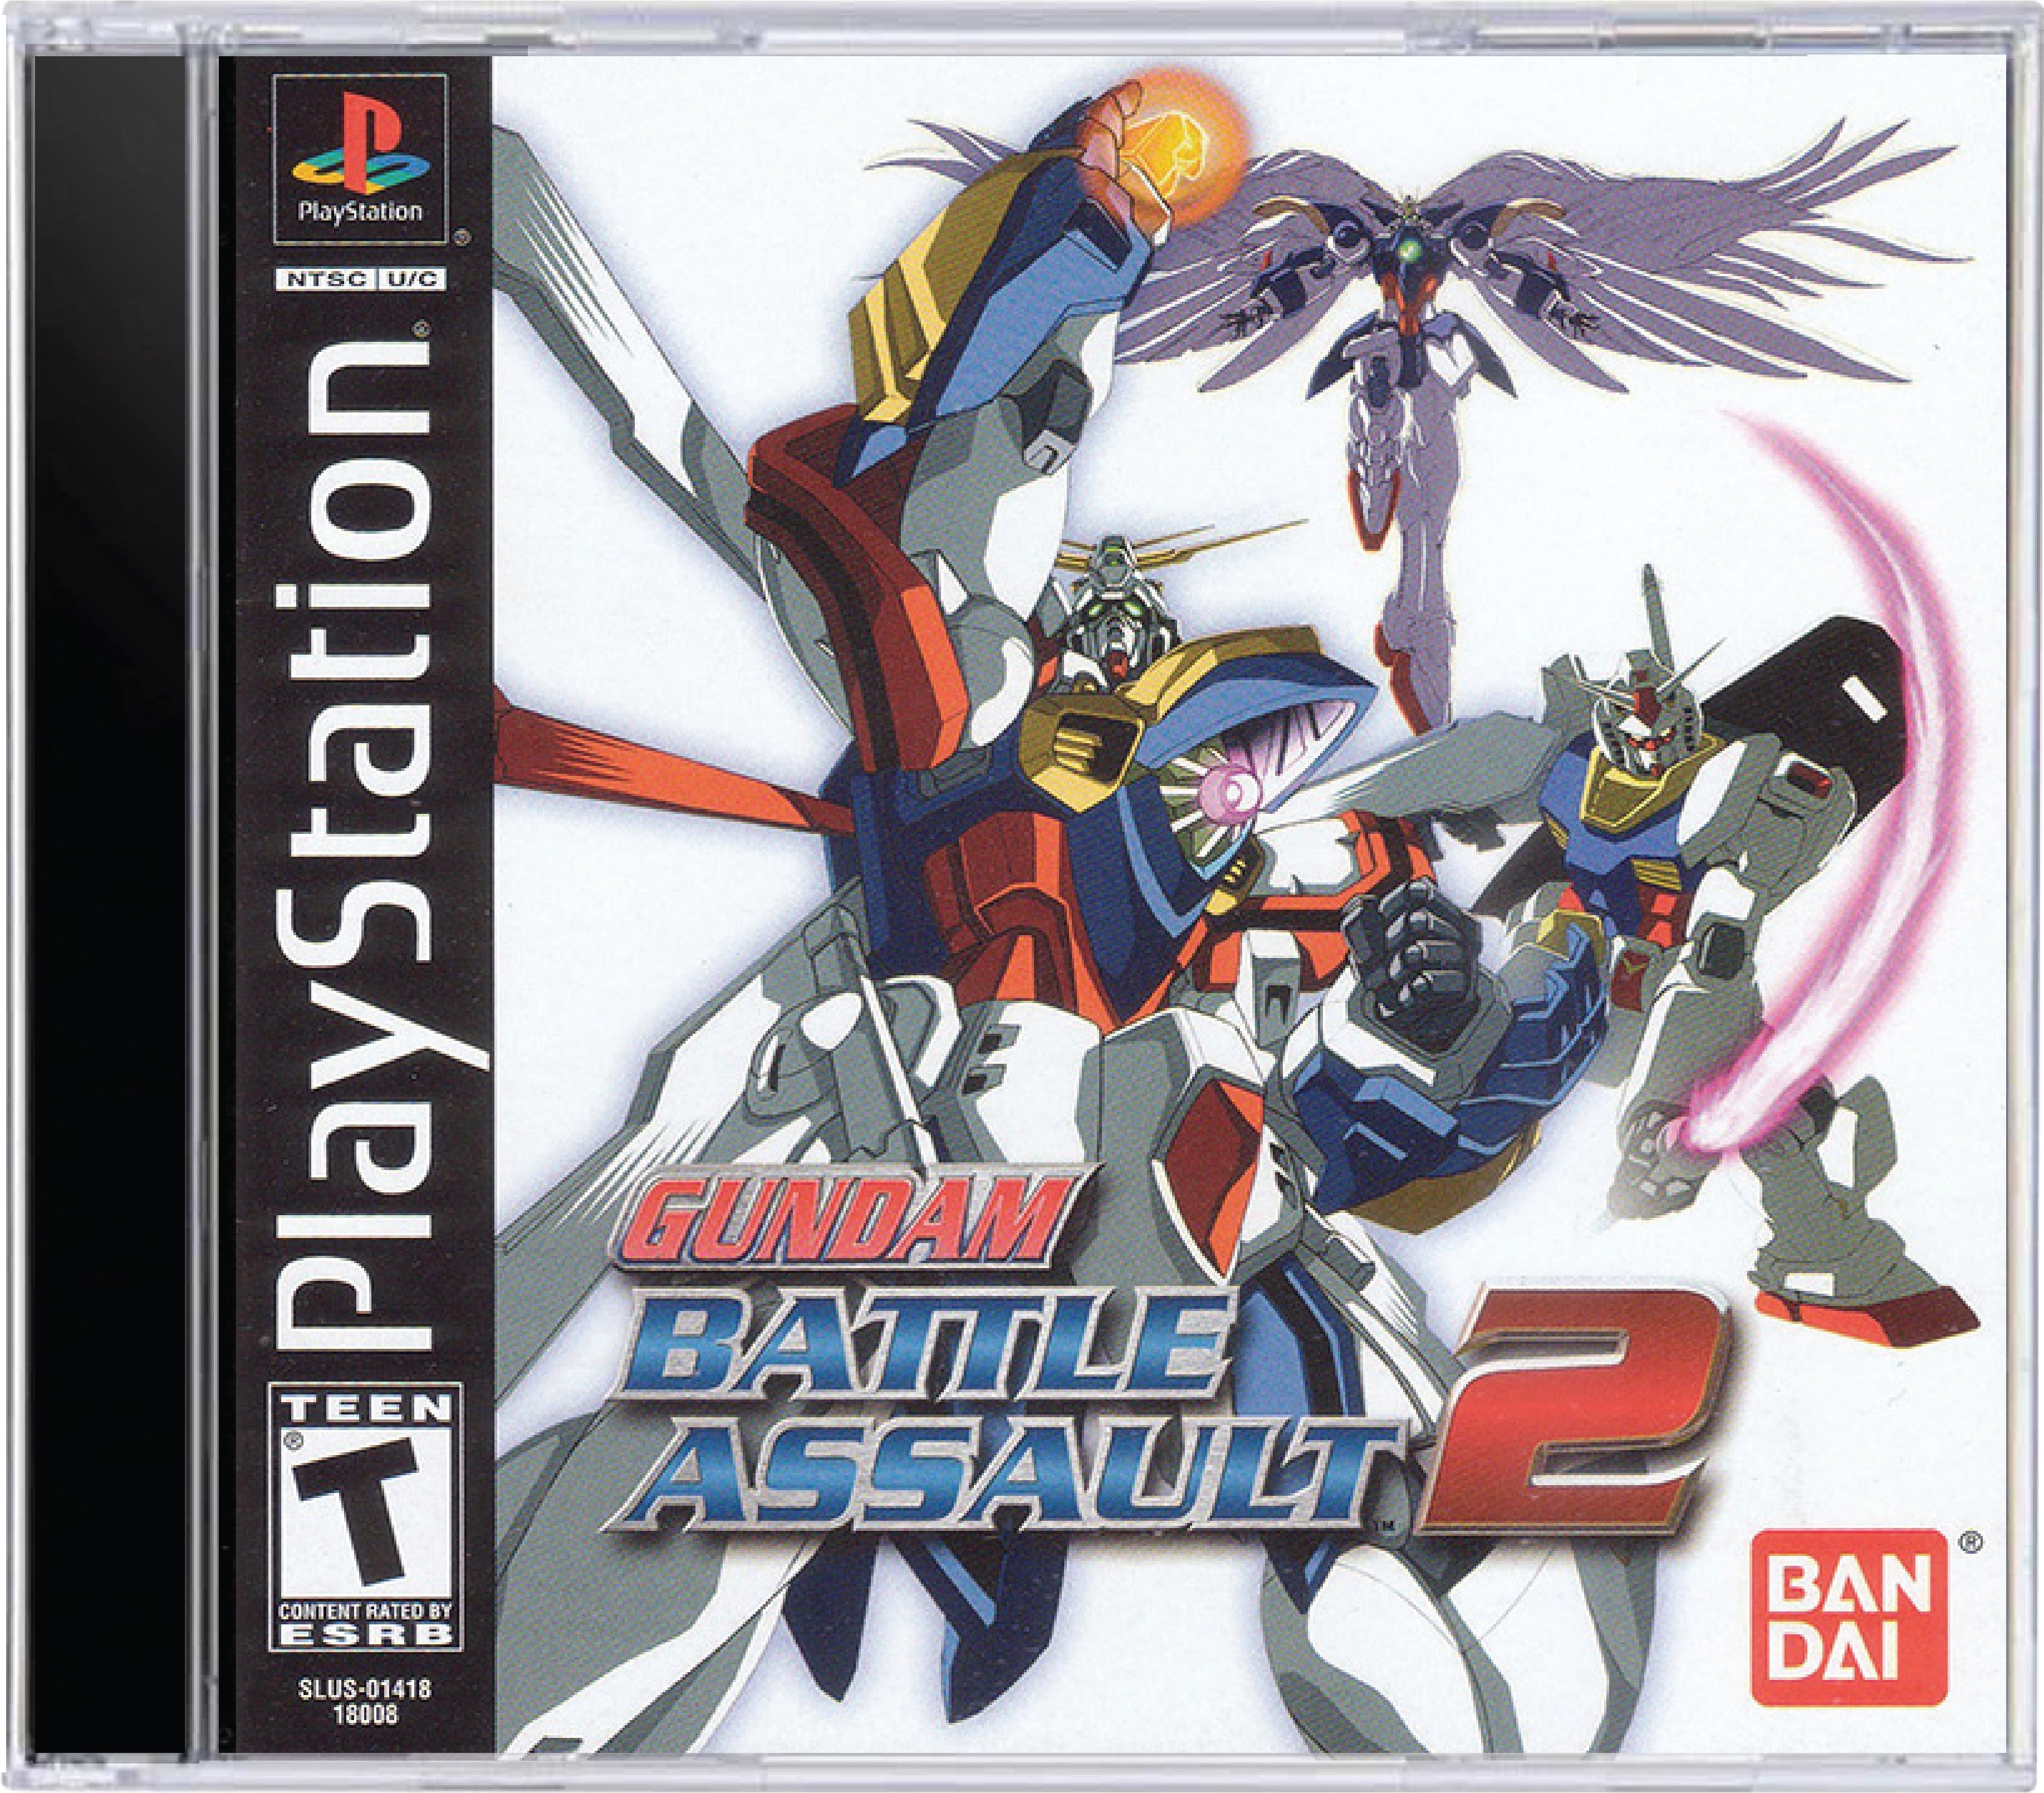 Gundam Battle Assault 2 Cover Art and Product Photo